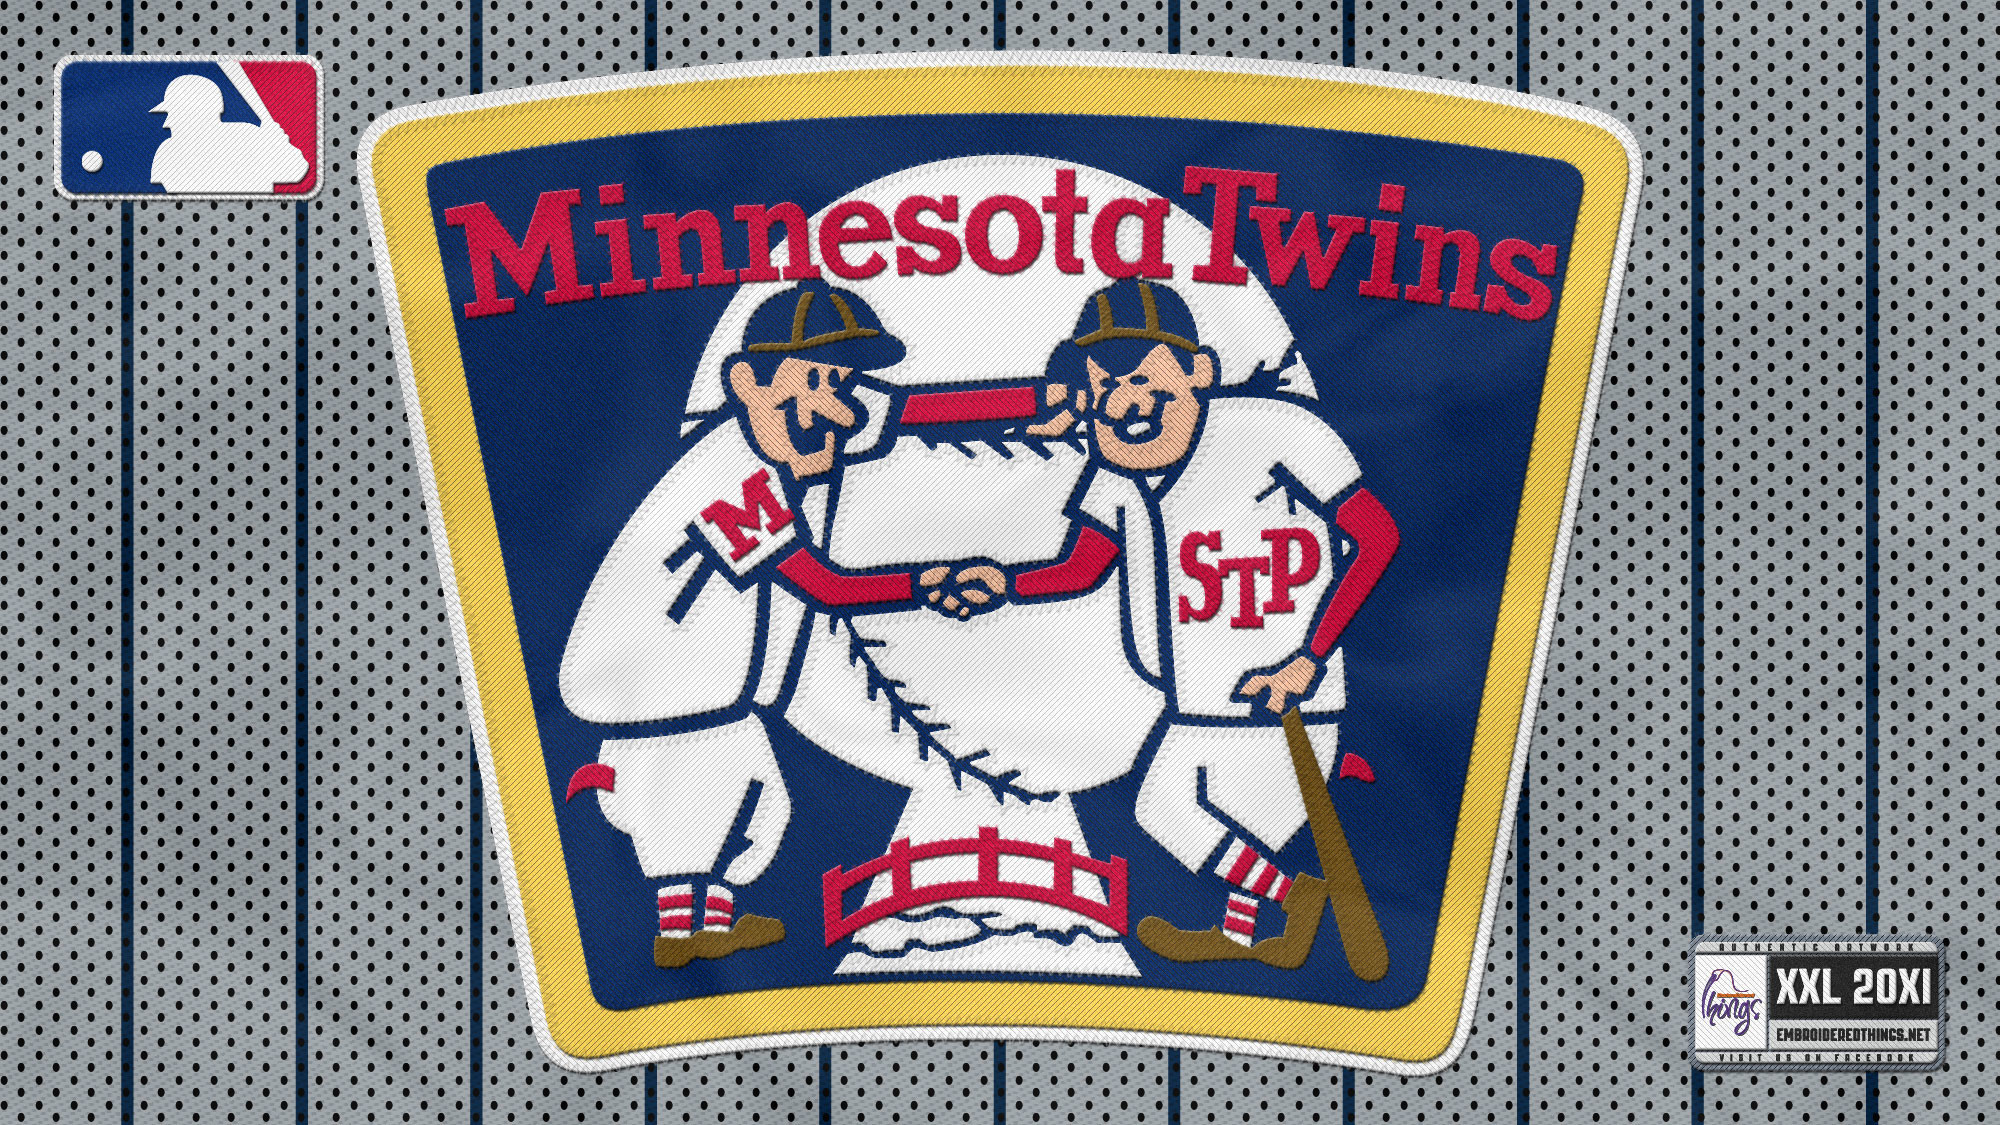 8 Minnesota Twins Regulation Cornhole Bags Source Â - Baseball Desktop Wallpaper Yankees - HD Wallpaper 